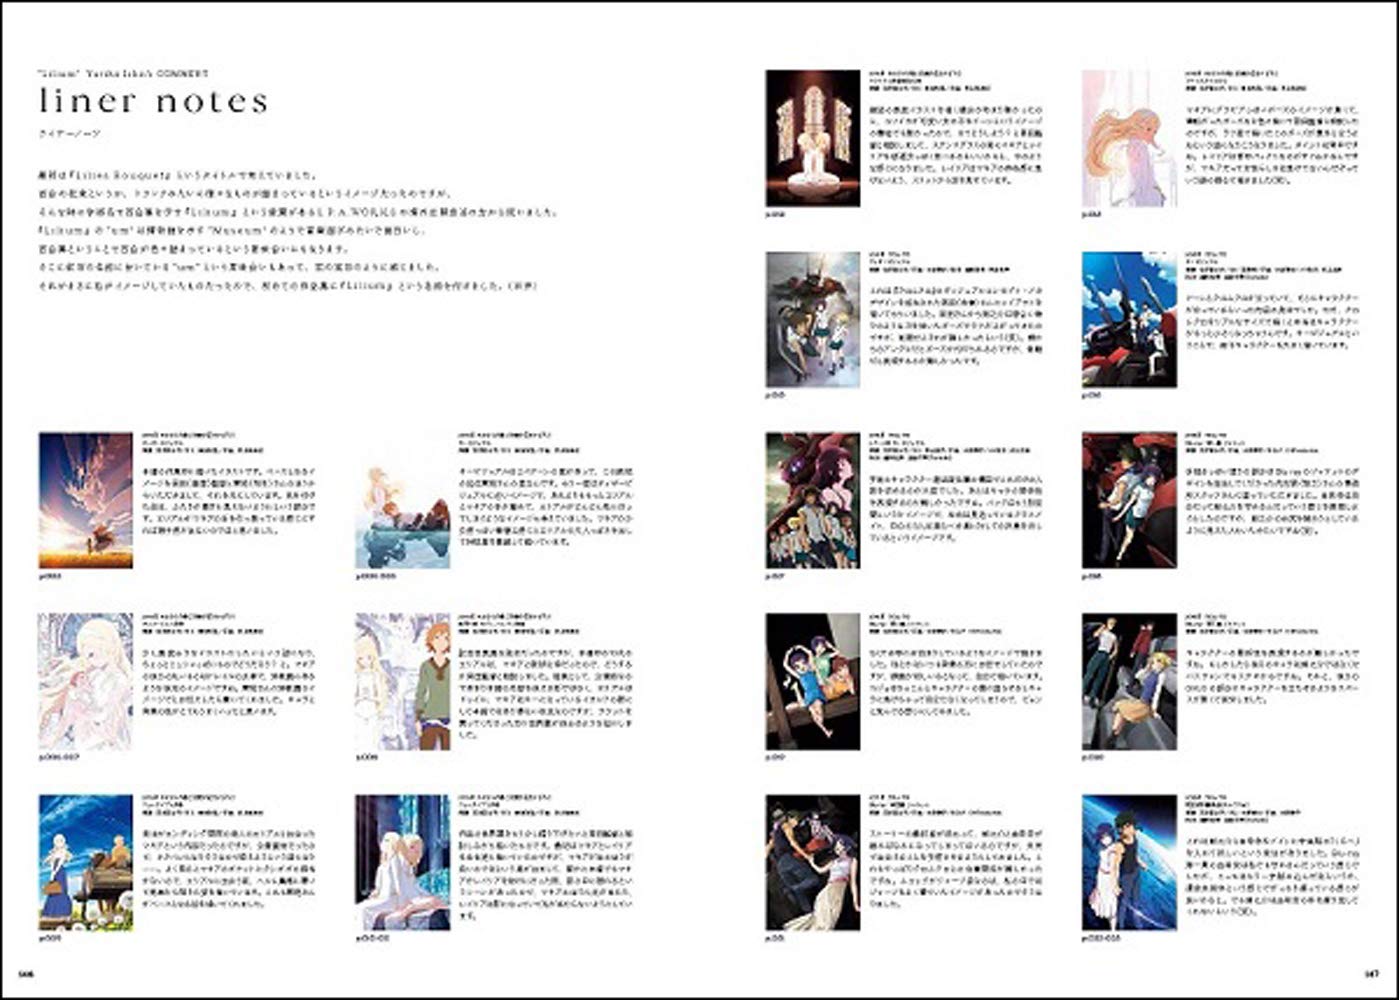 Nagi No Asukara Maquia & More Lilium Yuriko Ishii Animation Works Art Book  Anime